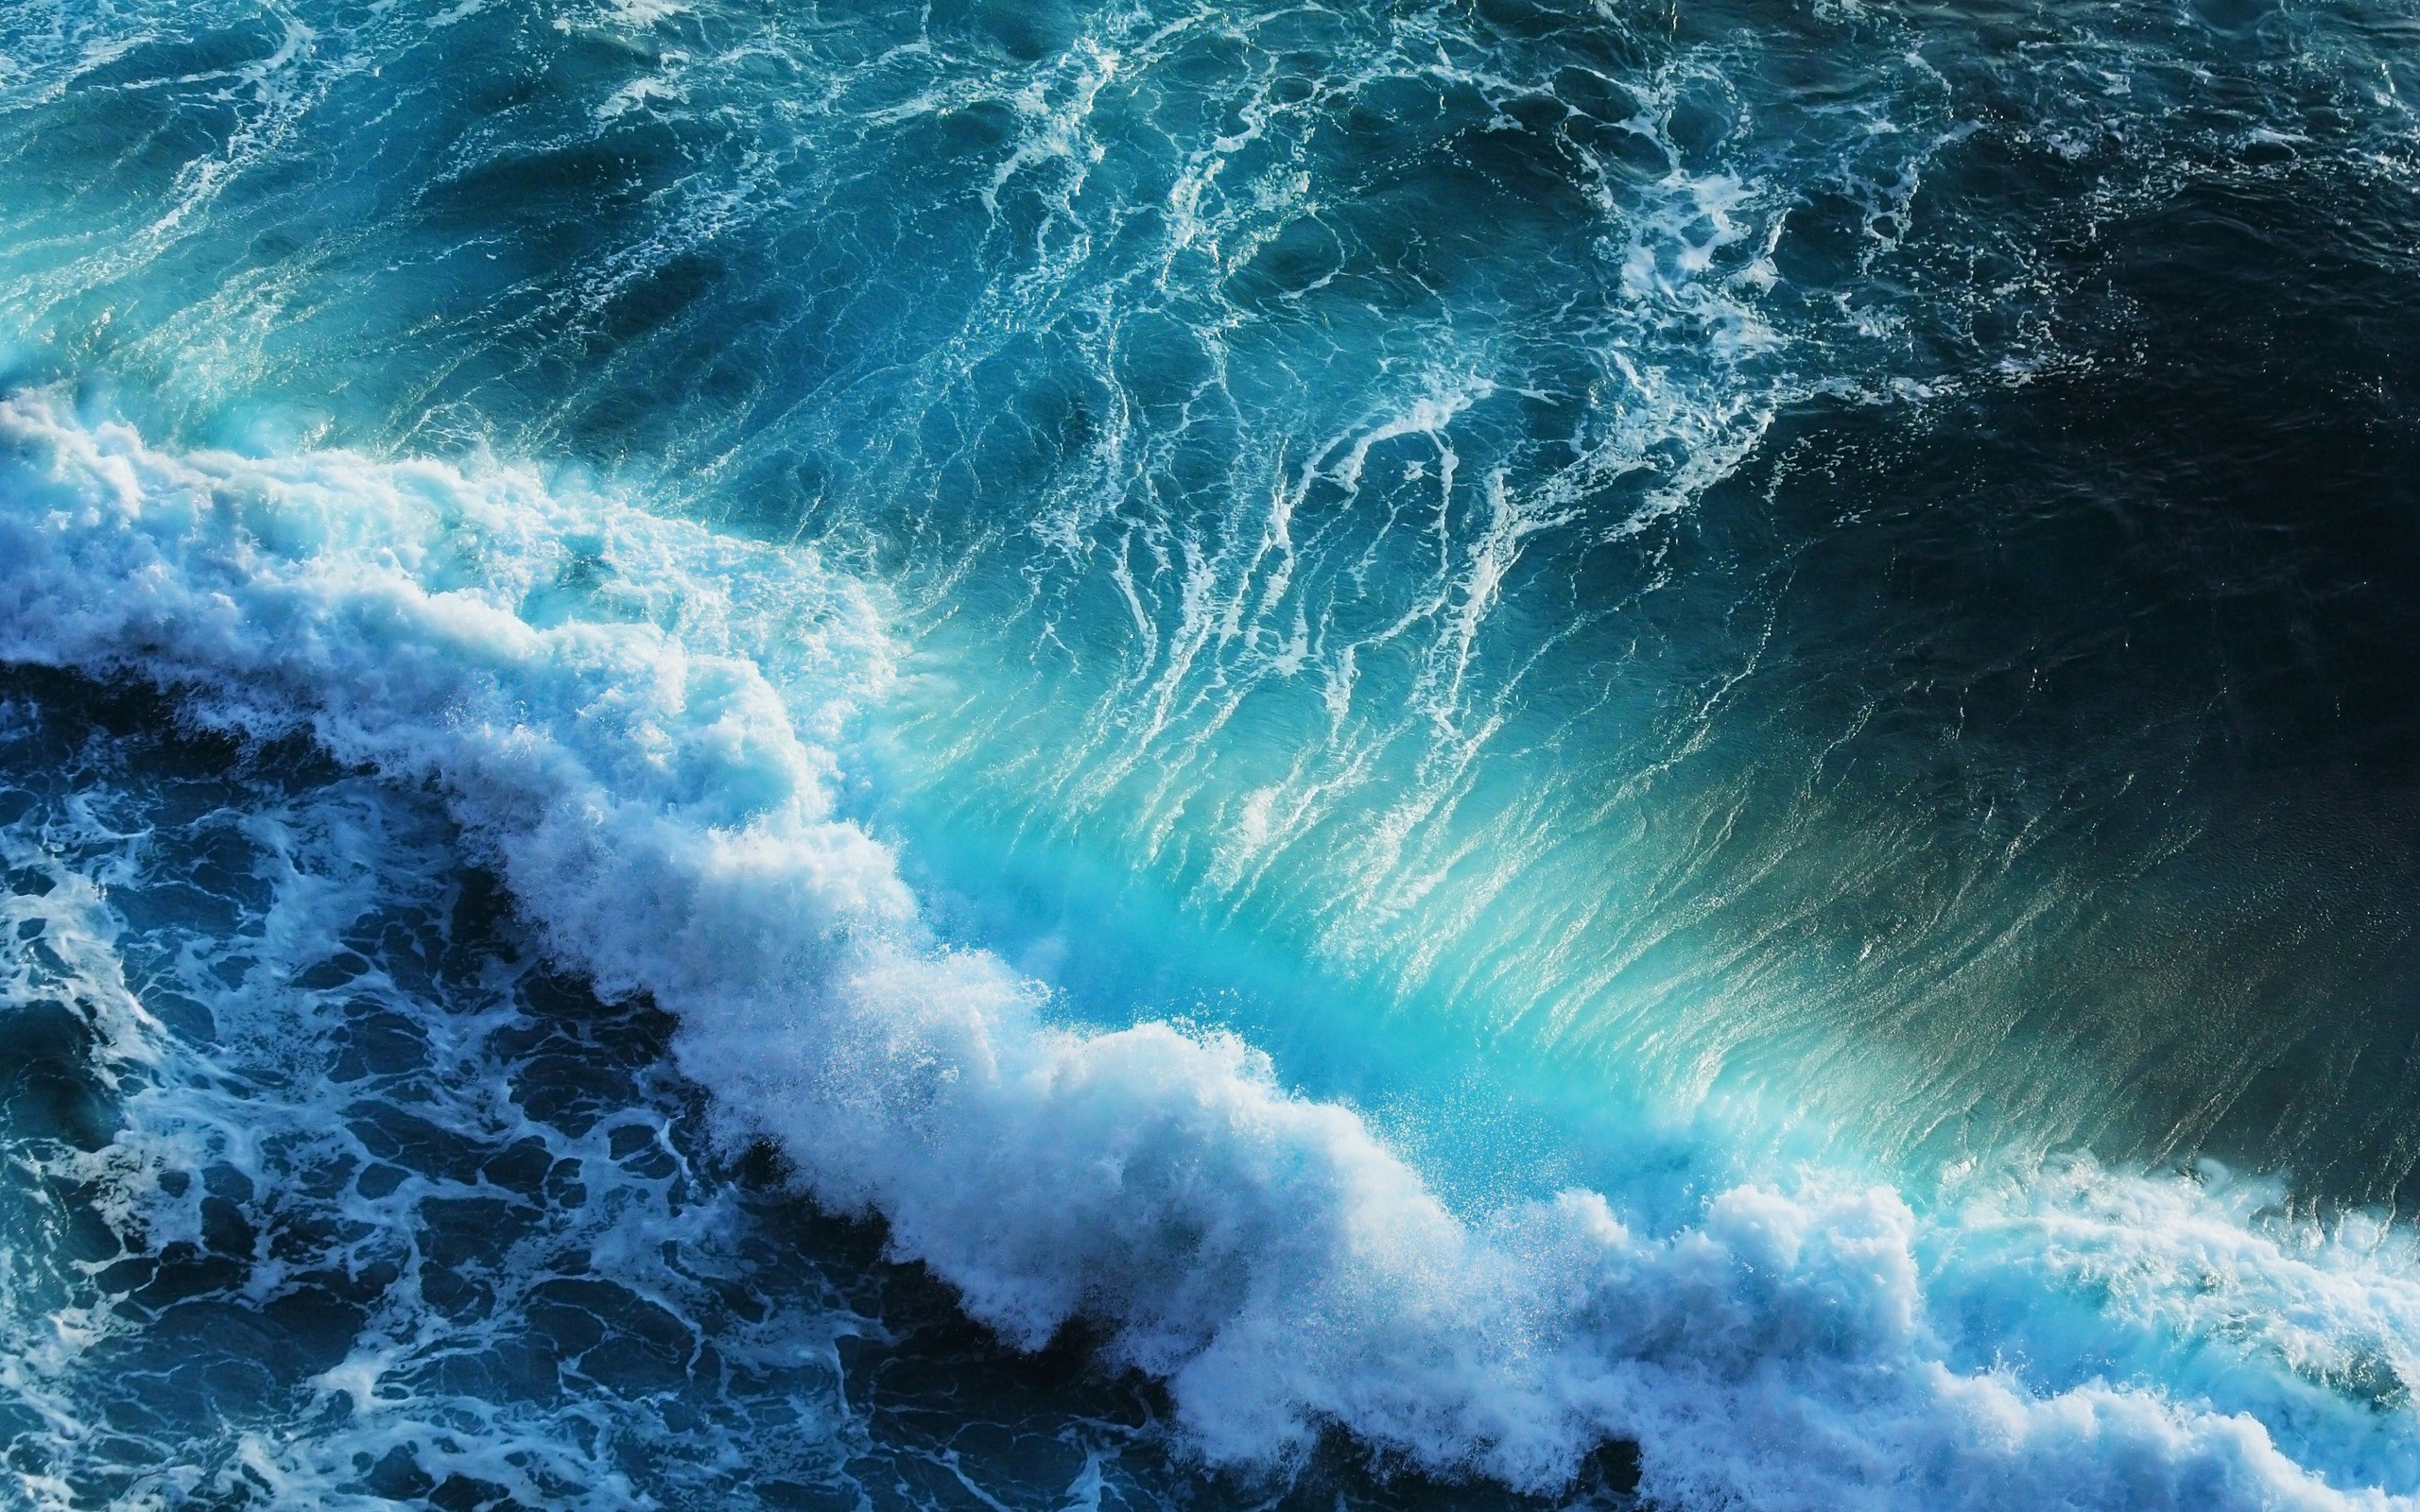 HD Wallpapers: Ocean Wave Images For Desktop, Free Download, KWS HD